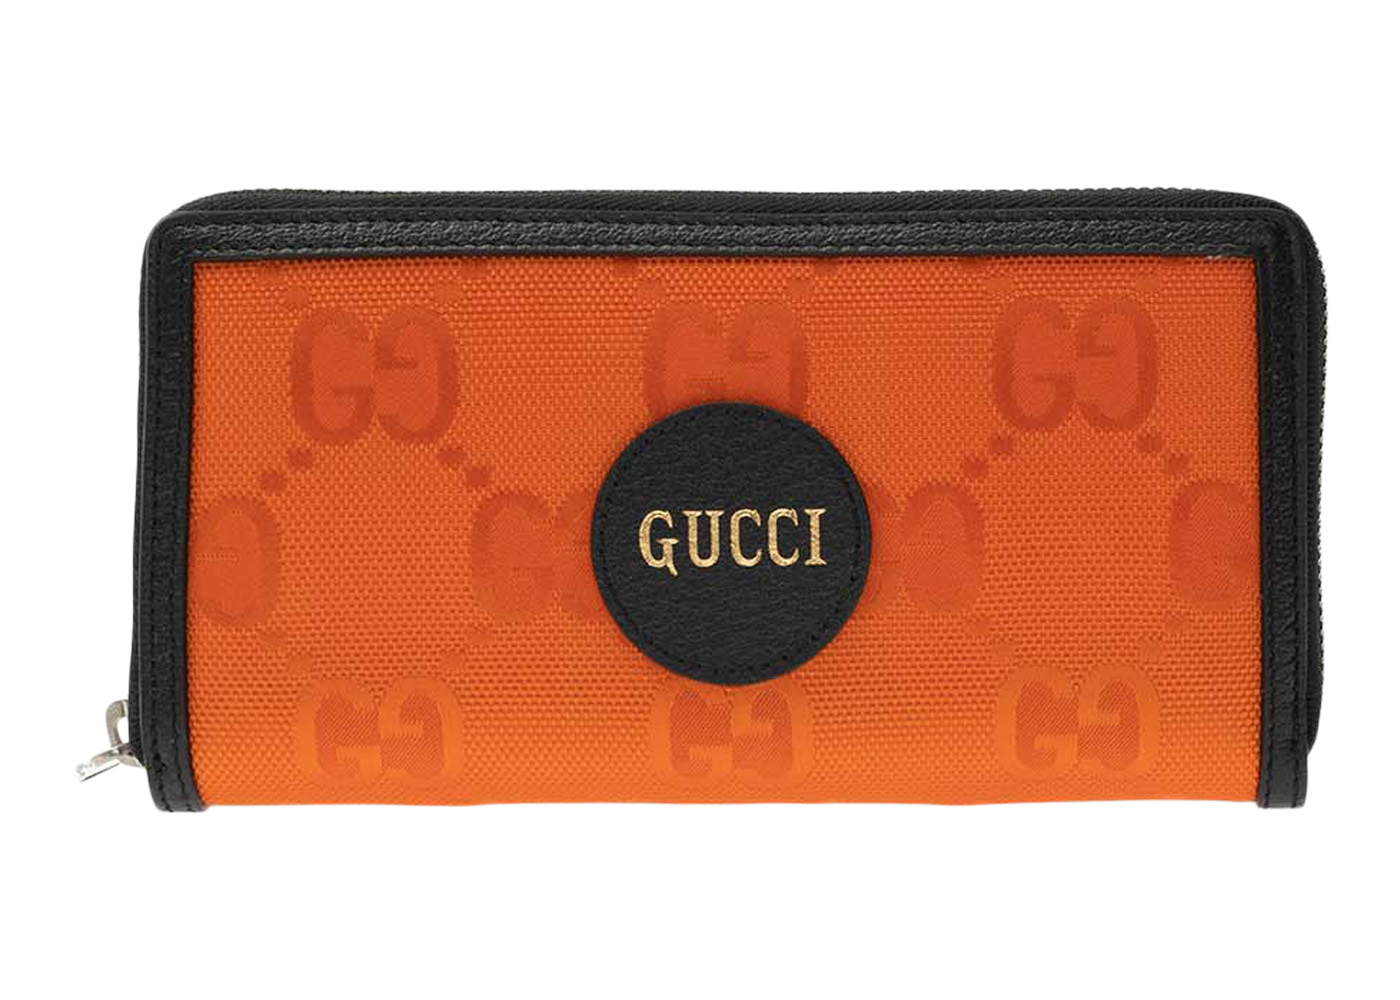 Gucci handbag Stock Photos, Royalty Free Gucci handbag Images |  Depositphotos